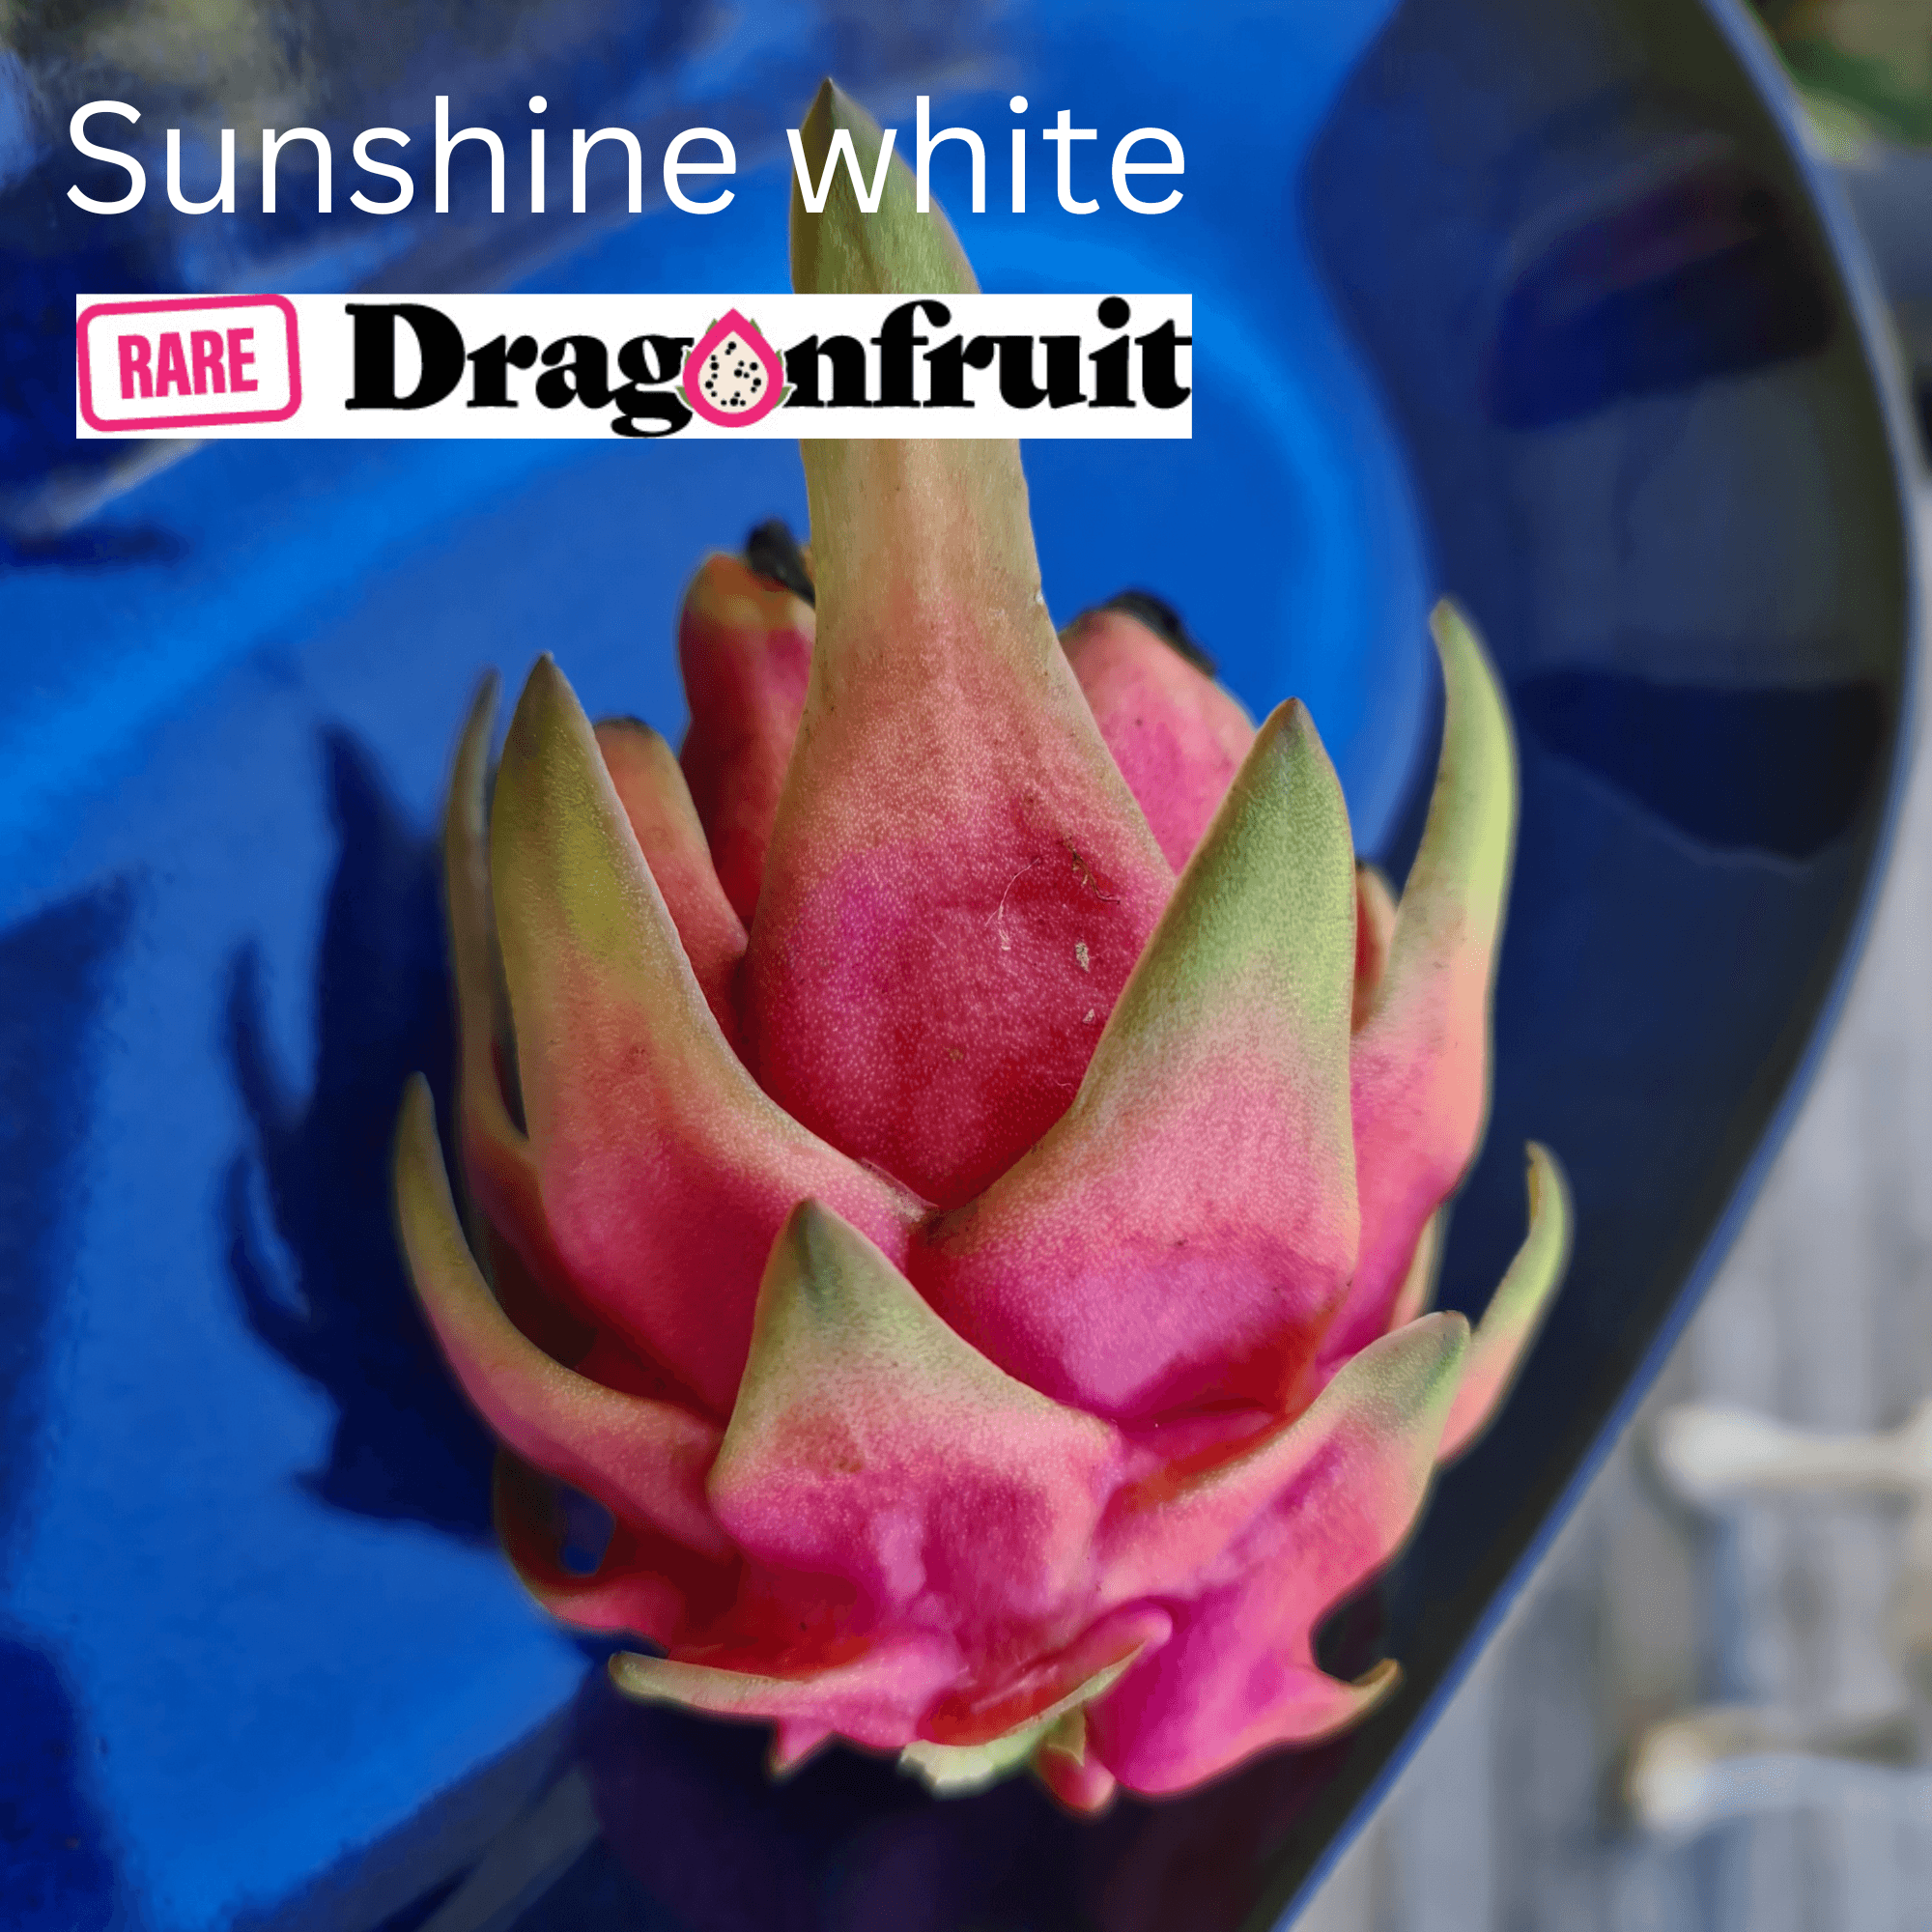 Sunshine White dragon fruit - Rare Dragon Fruit